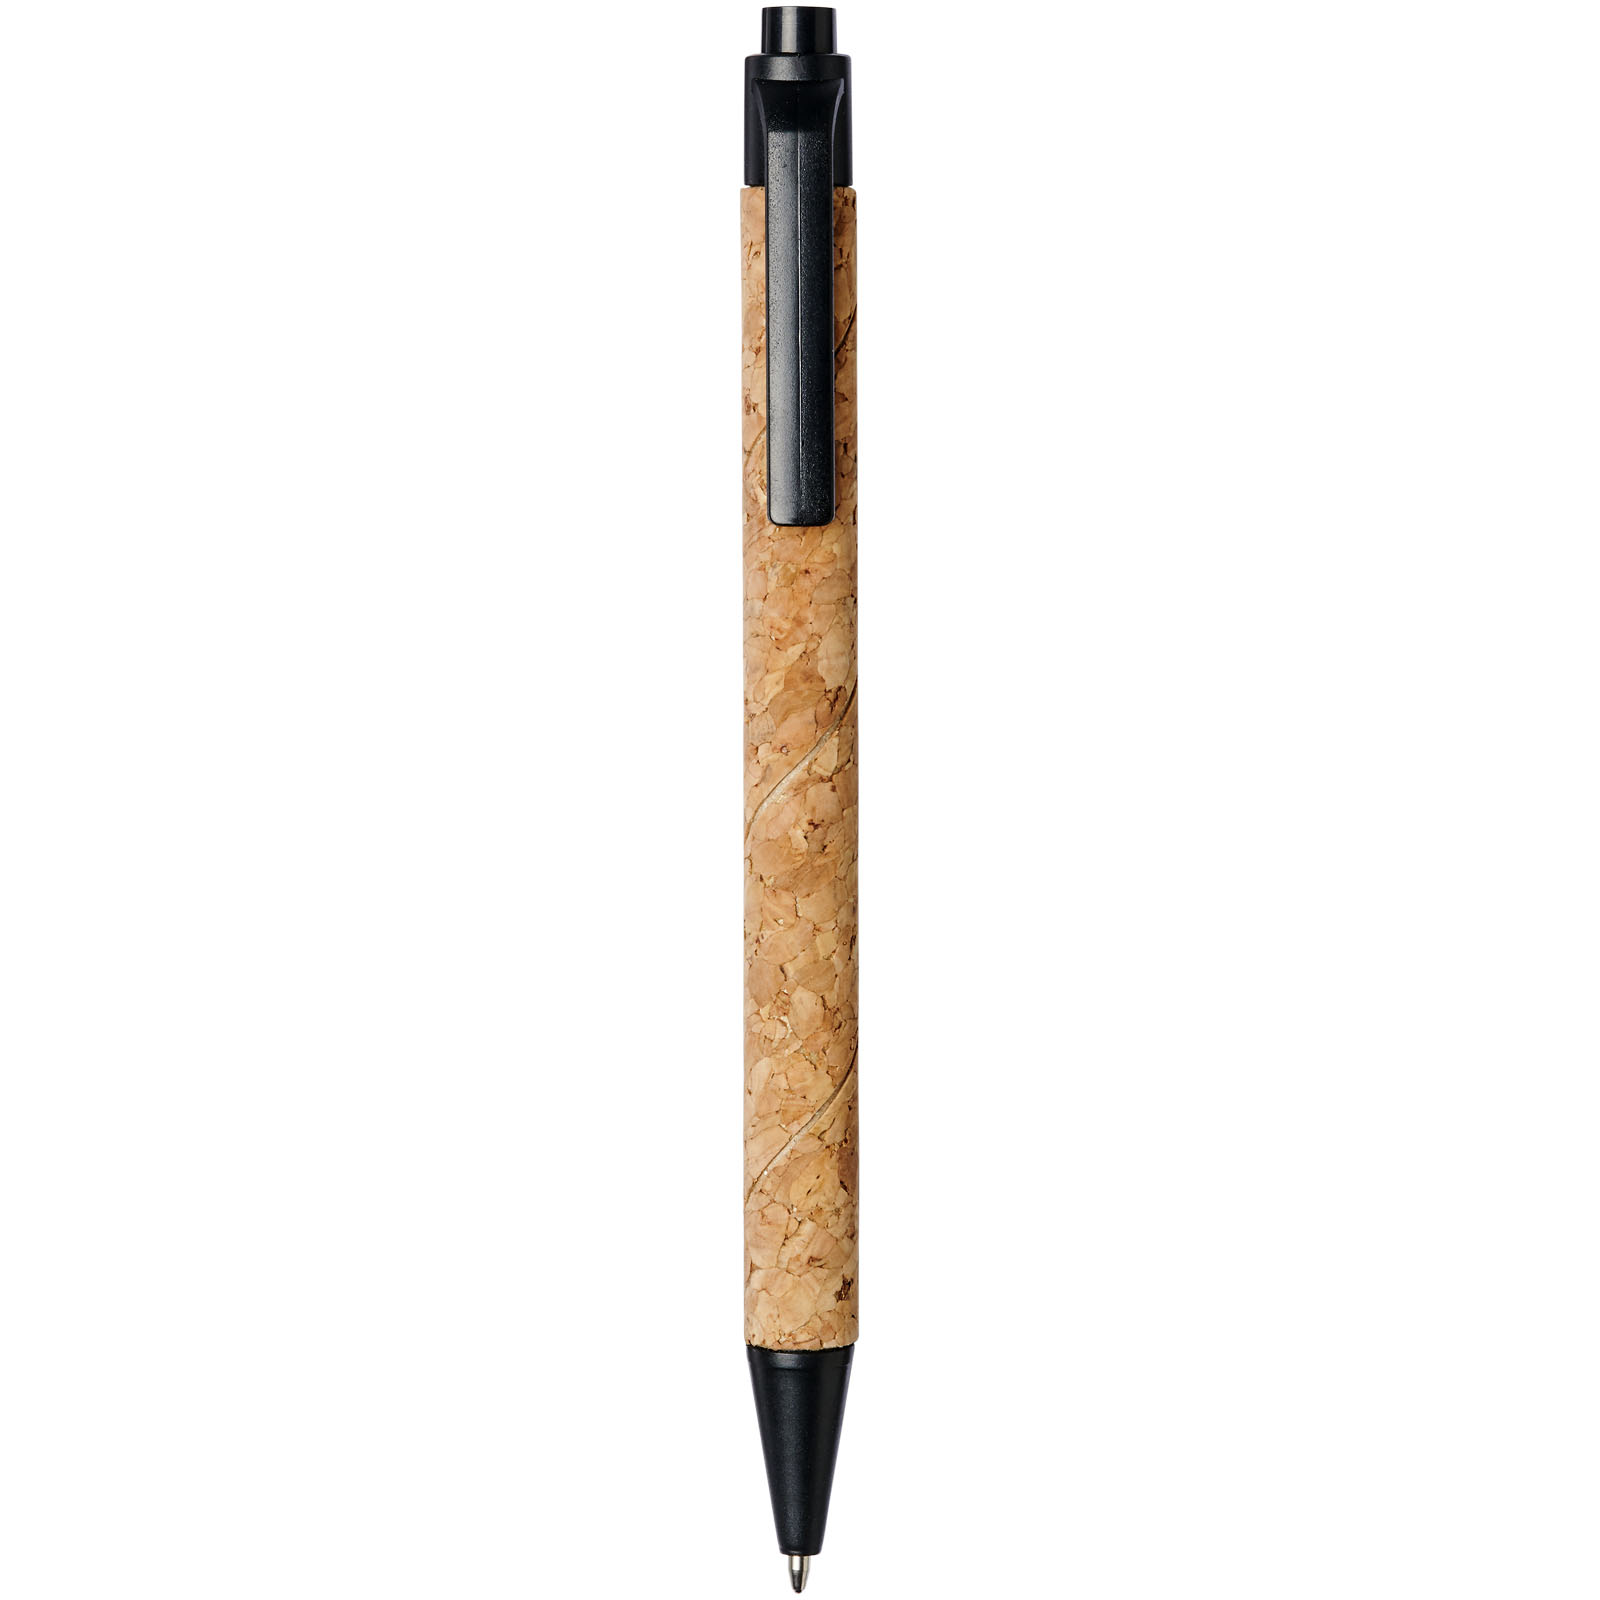 Ballpoint Pens - Midar cork and wheat straw ballpoint pen